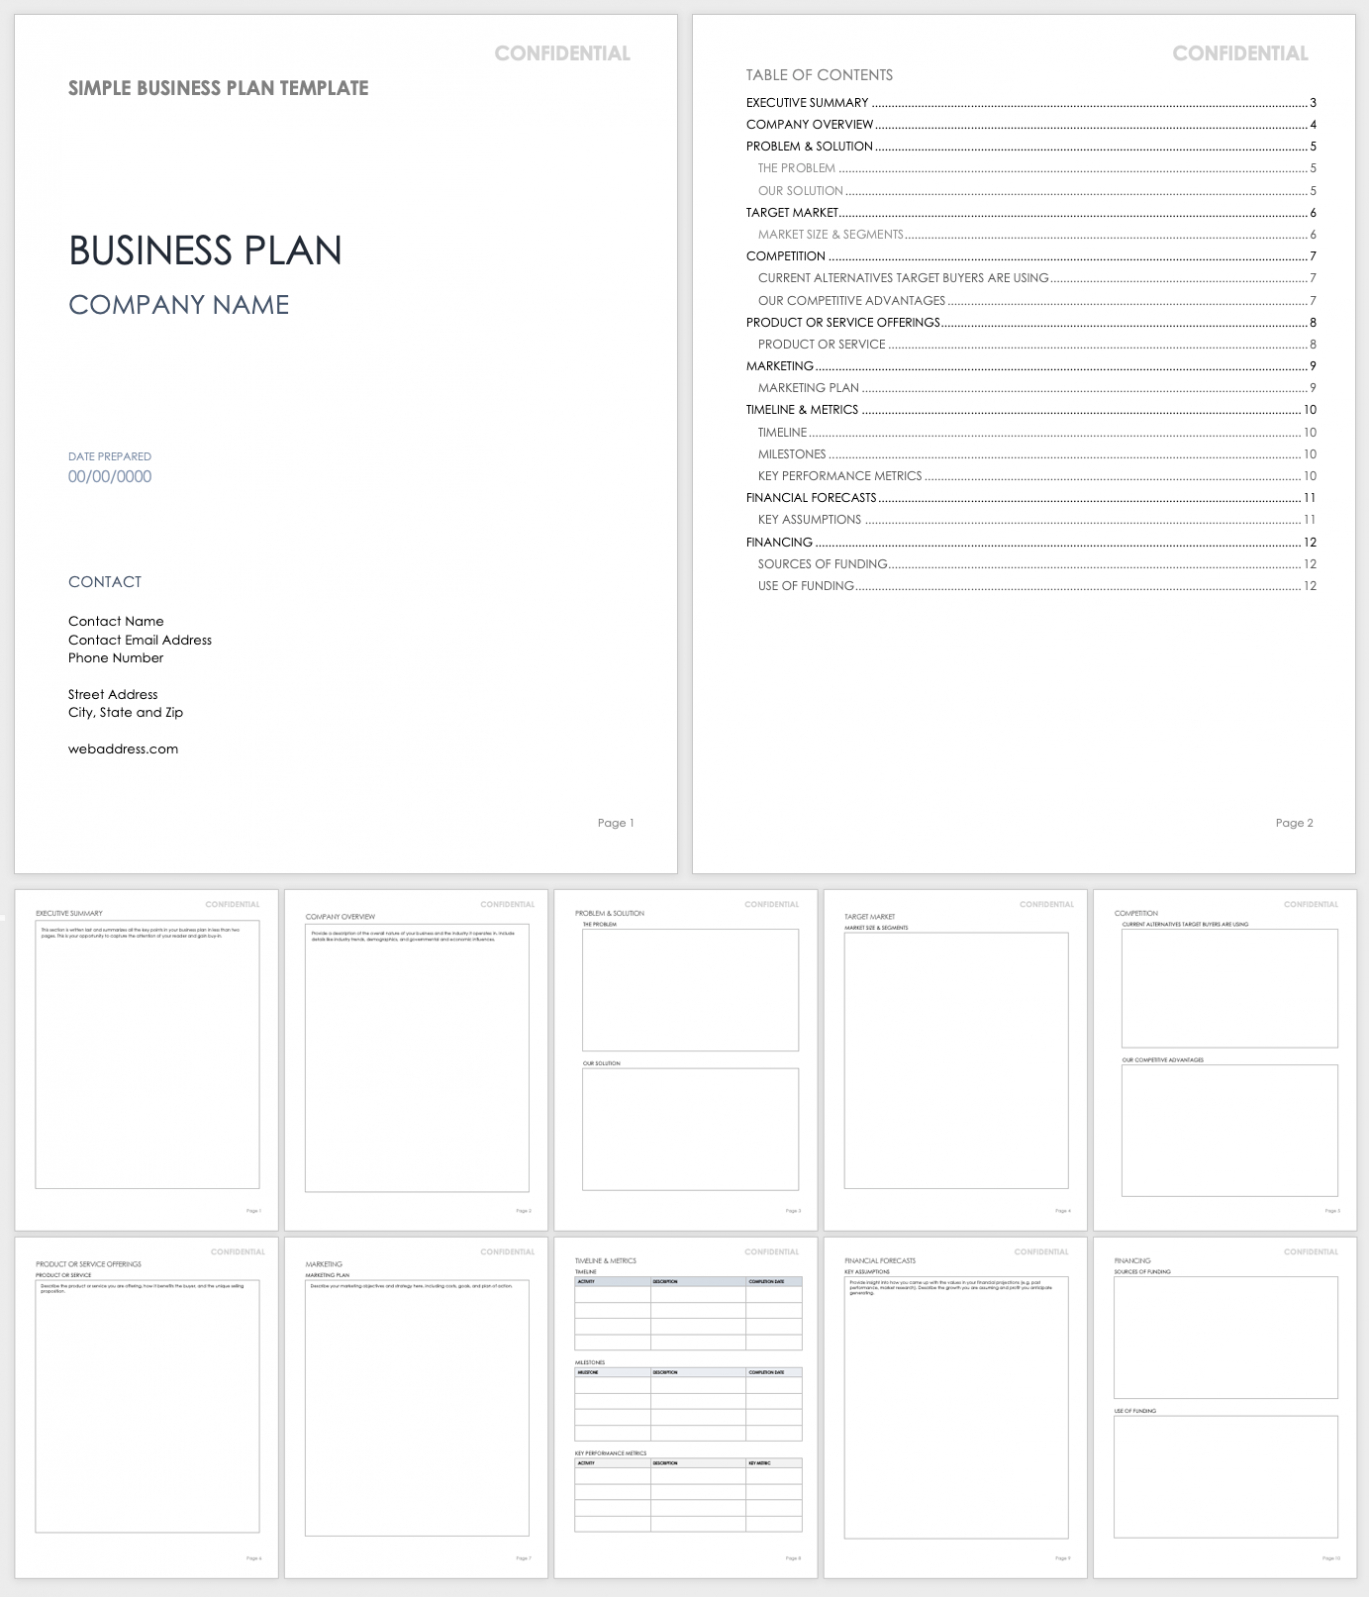 Free Simple Business Plan Templates | Smartsheet with Construction Business Plan Template Free